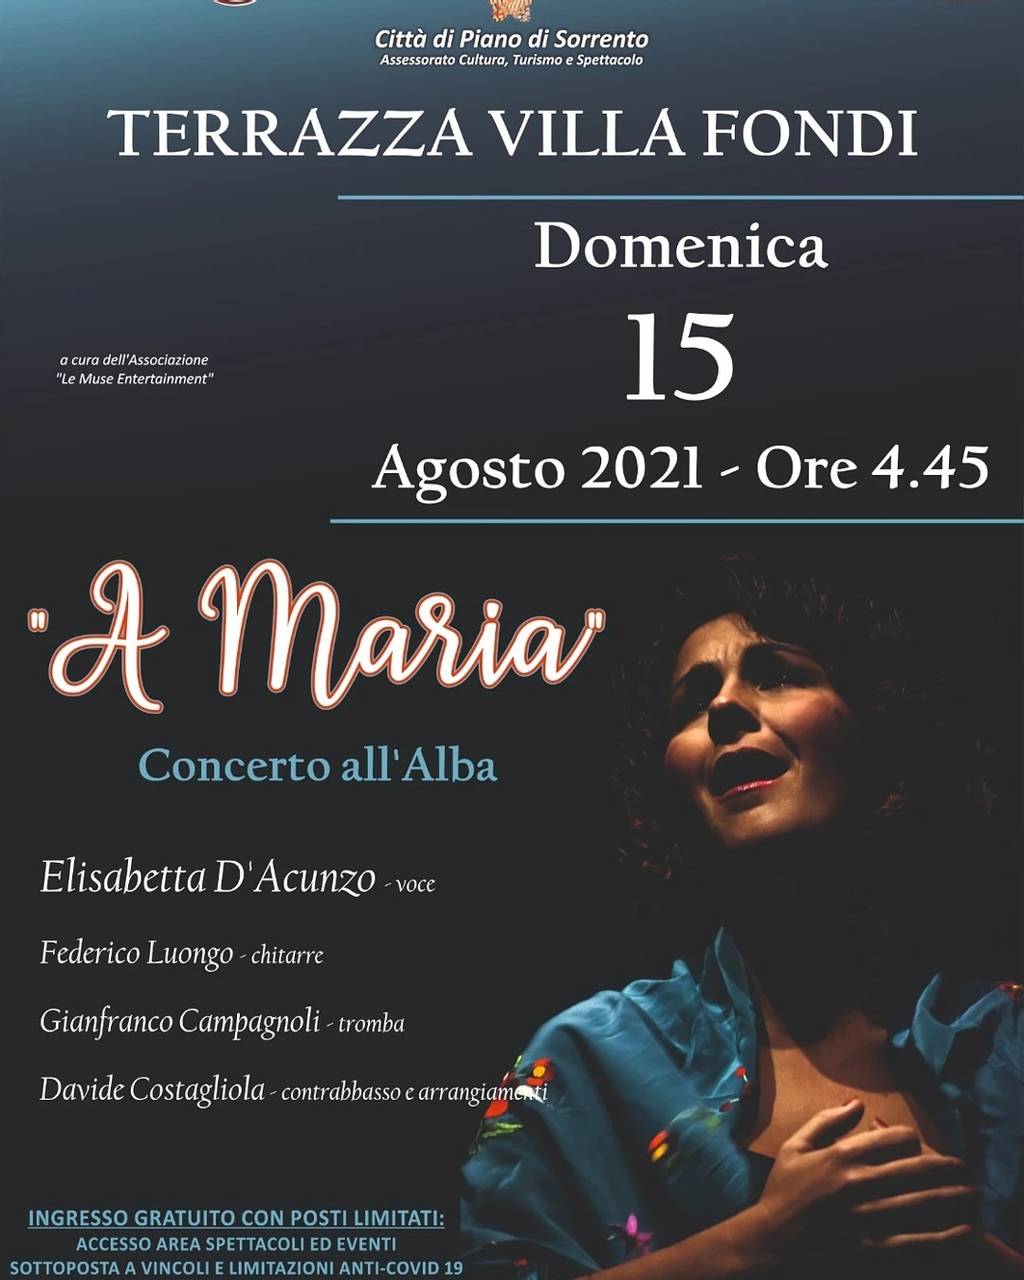 "A Maria" - Concerto all'Alba